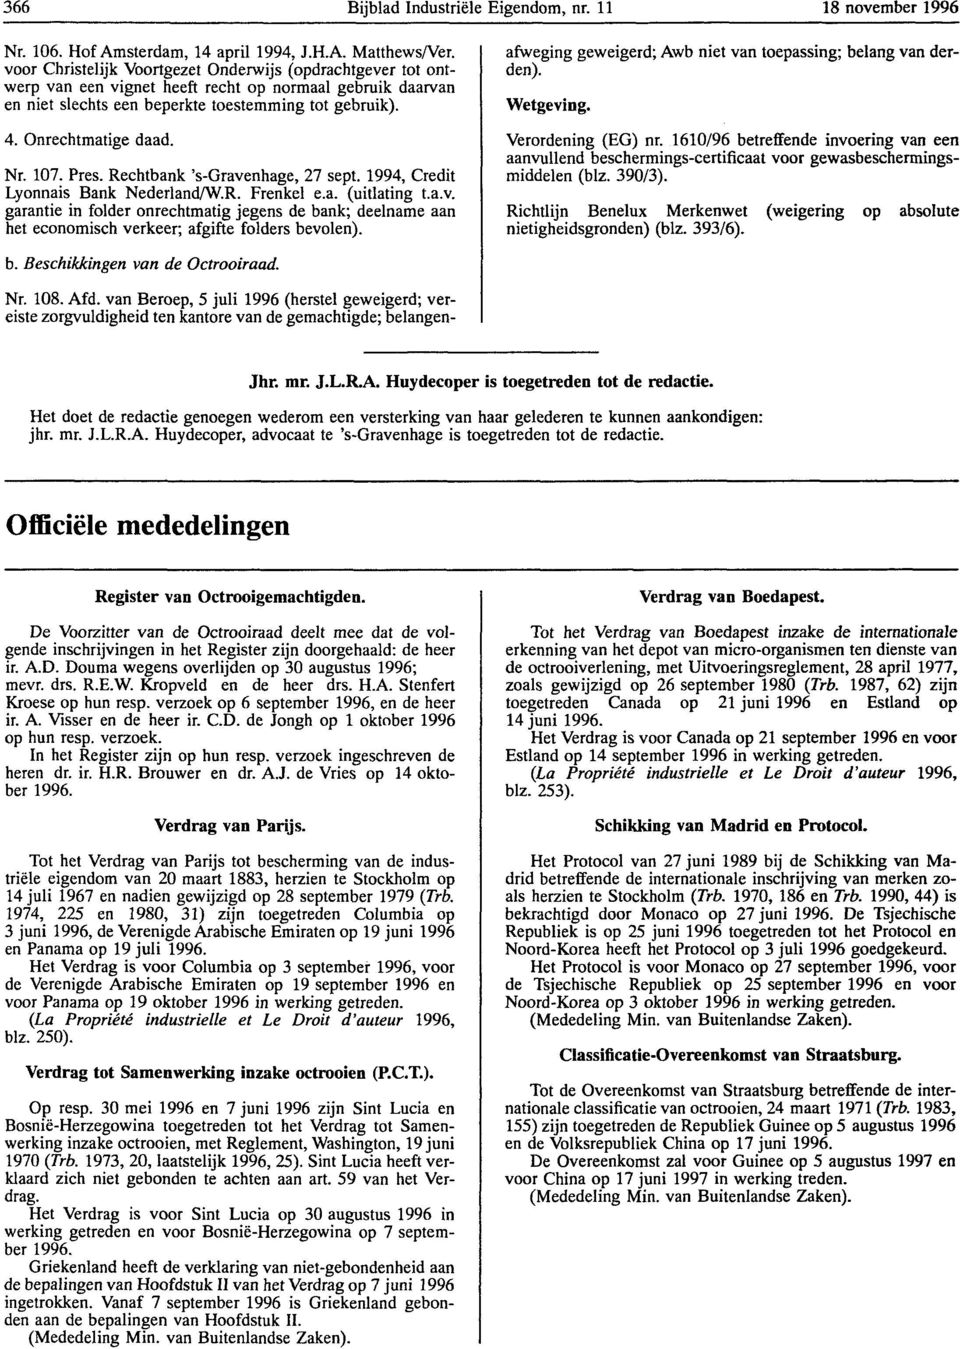 107. Pres. Rechtbank 's-gravenhage, 27 sept. 1994, Credit Lyonnais Bank Nederland/W.R. Frenkel e.a. (uitlating t.a.v. garantie in folder onrechtmatig jegens de bank; deelname aan het economisch verkeer; afgifte folders bevolen).